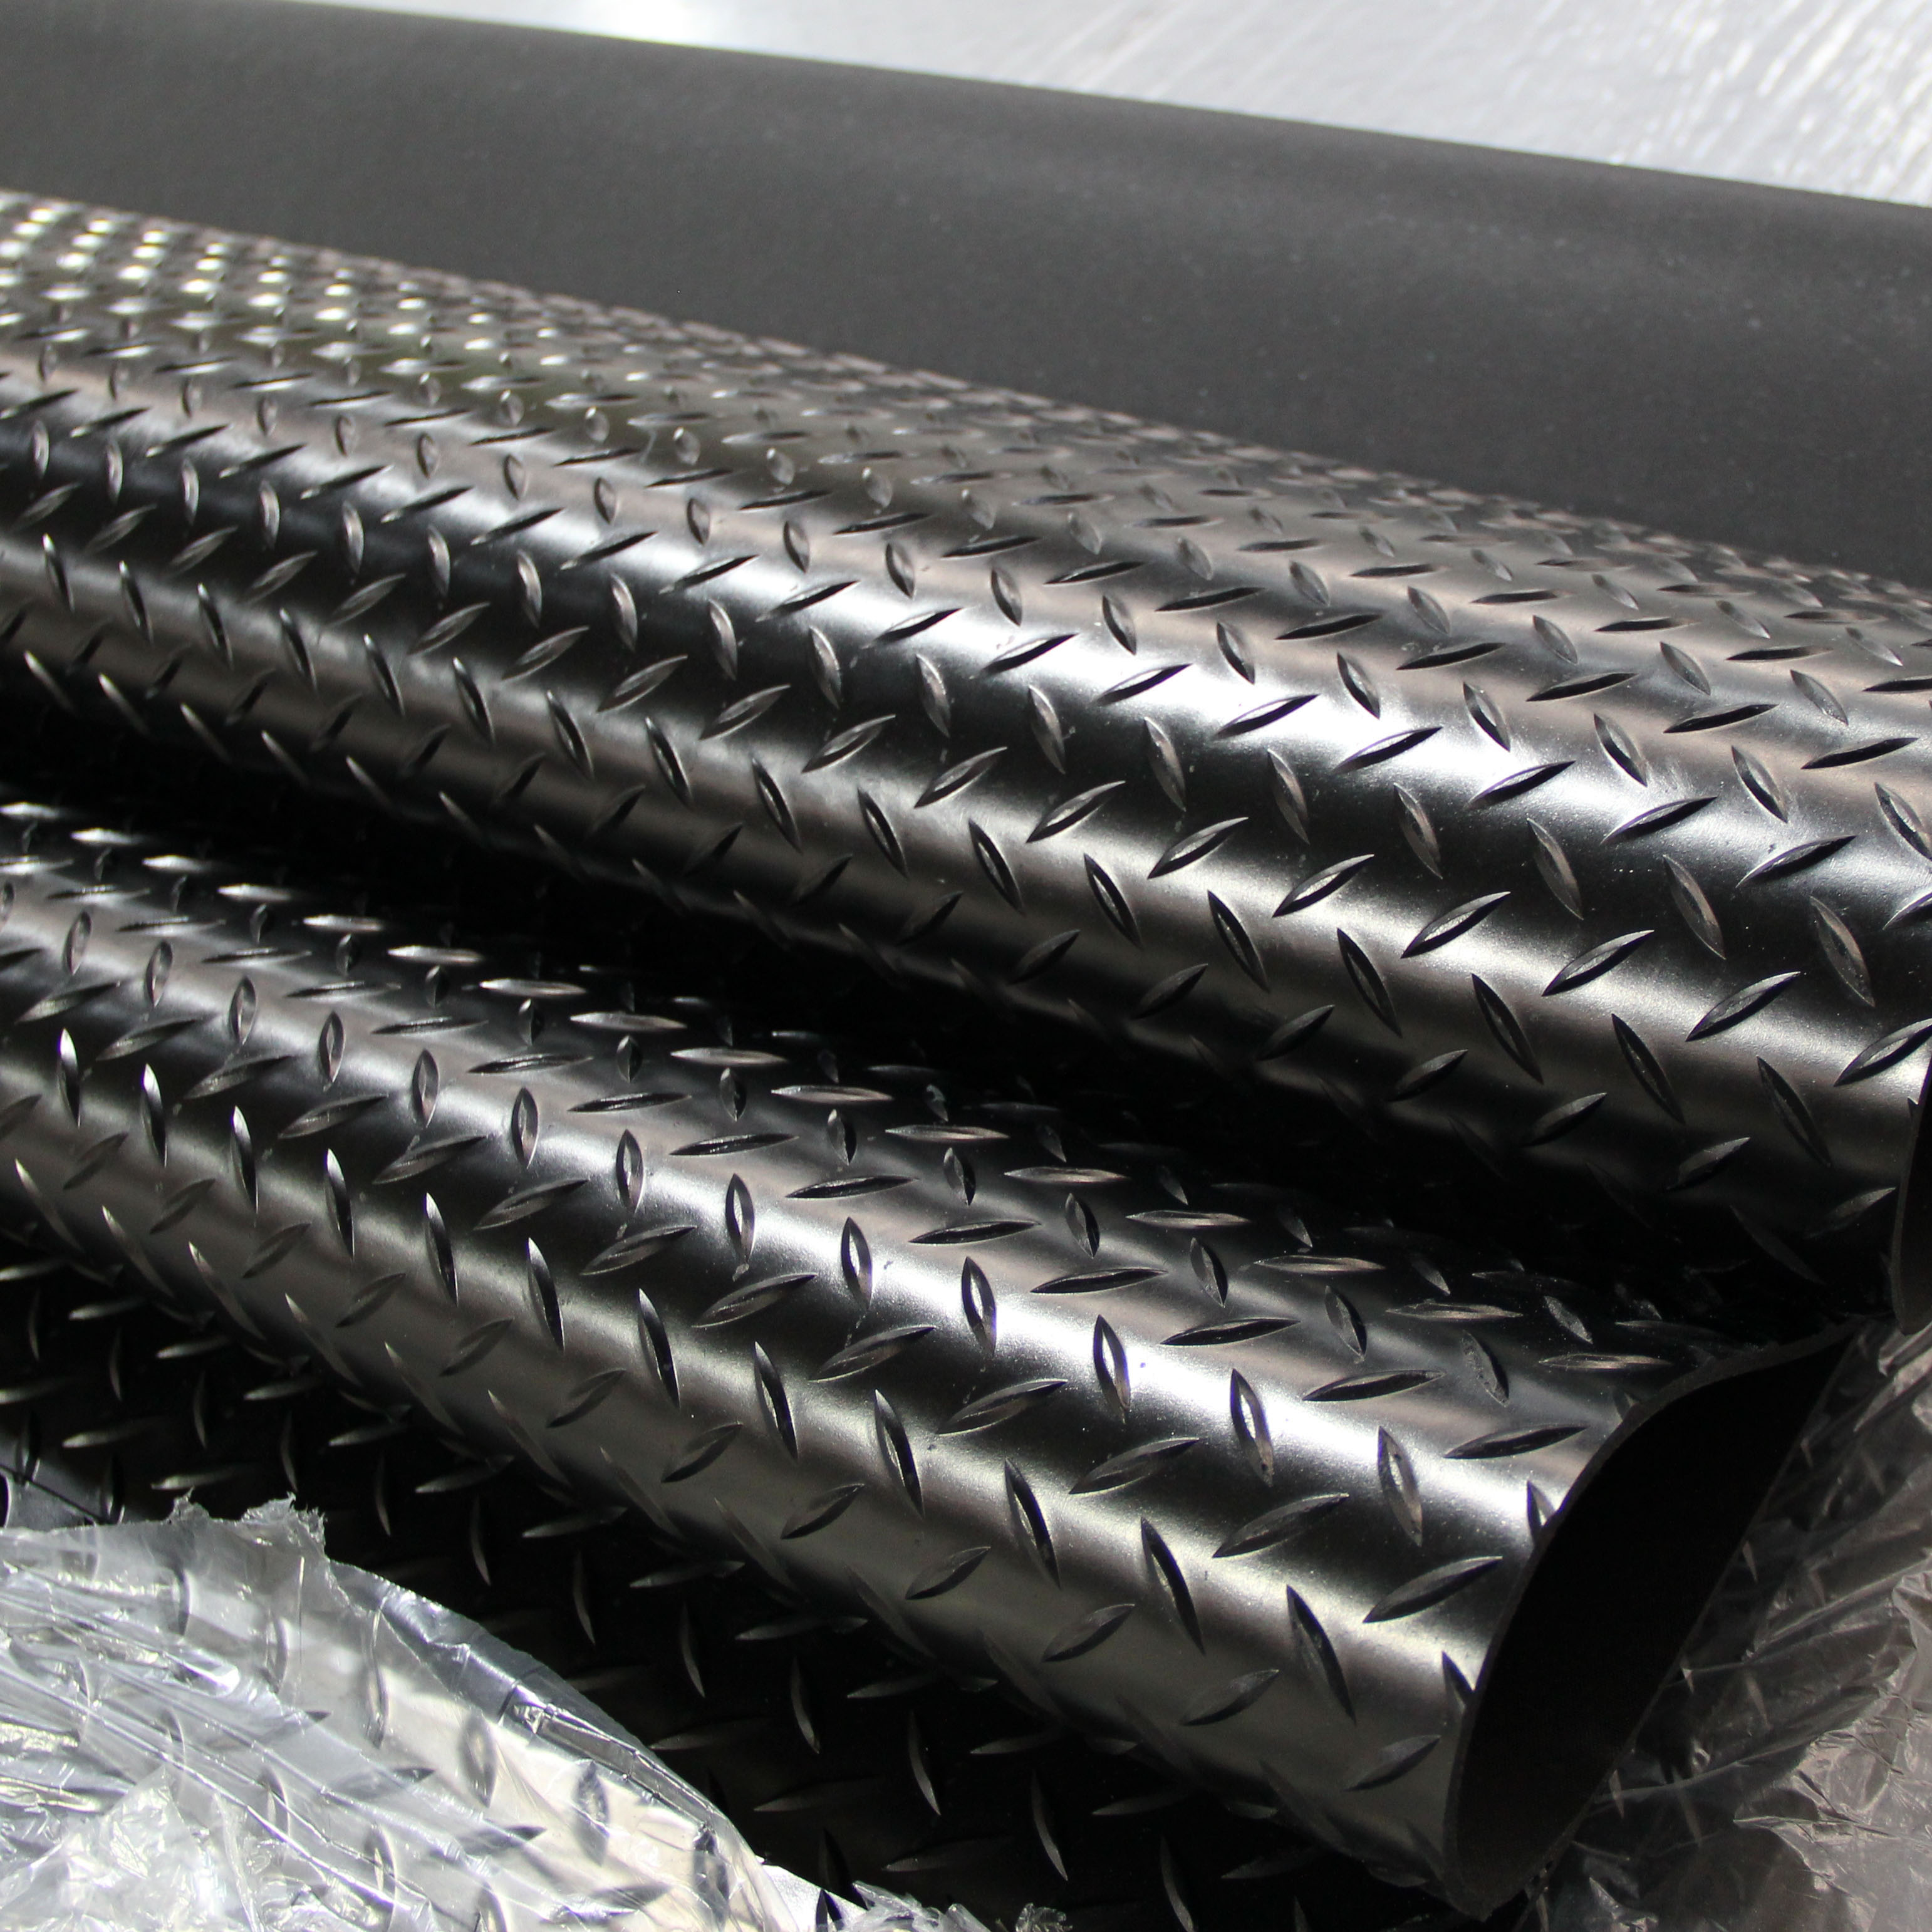 Diamond-Plate rubber flooring